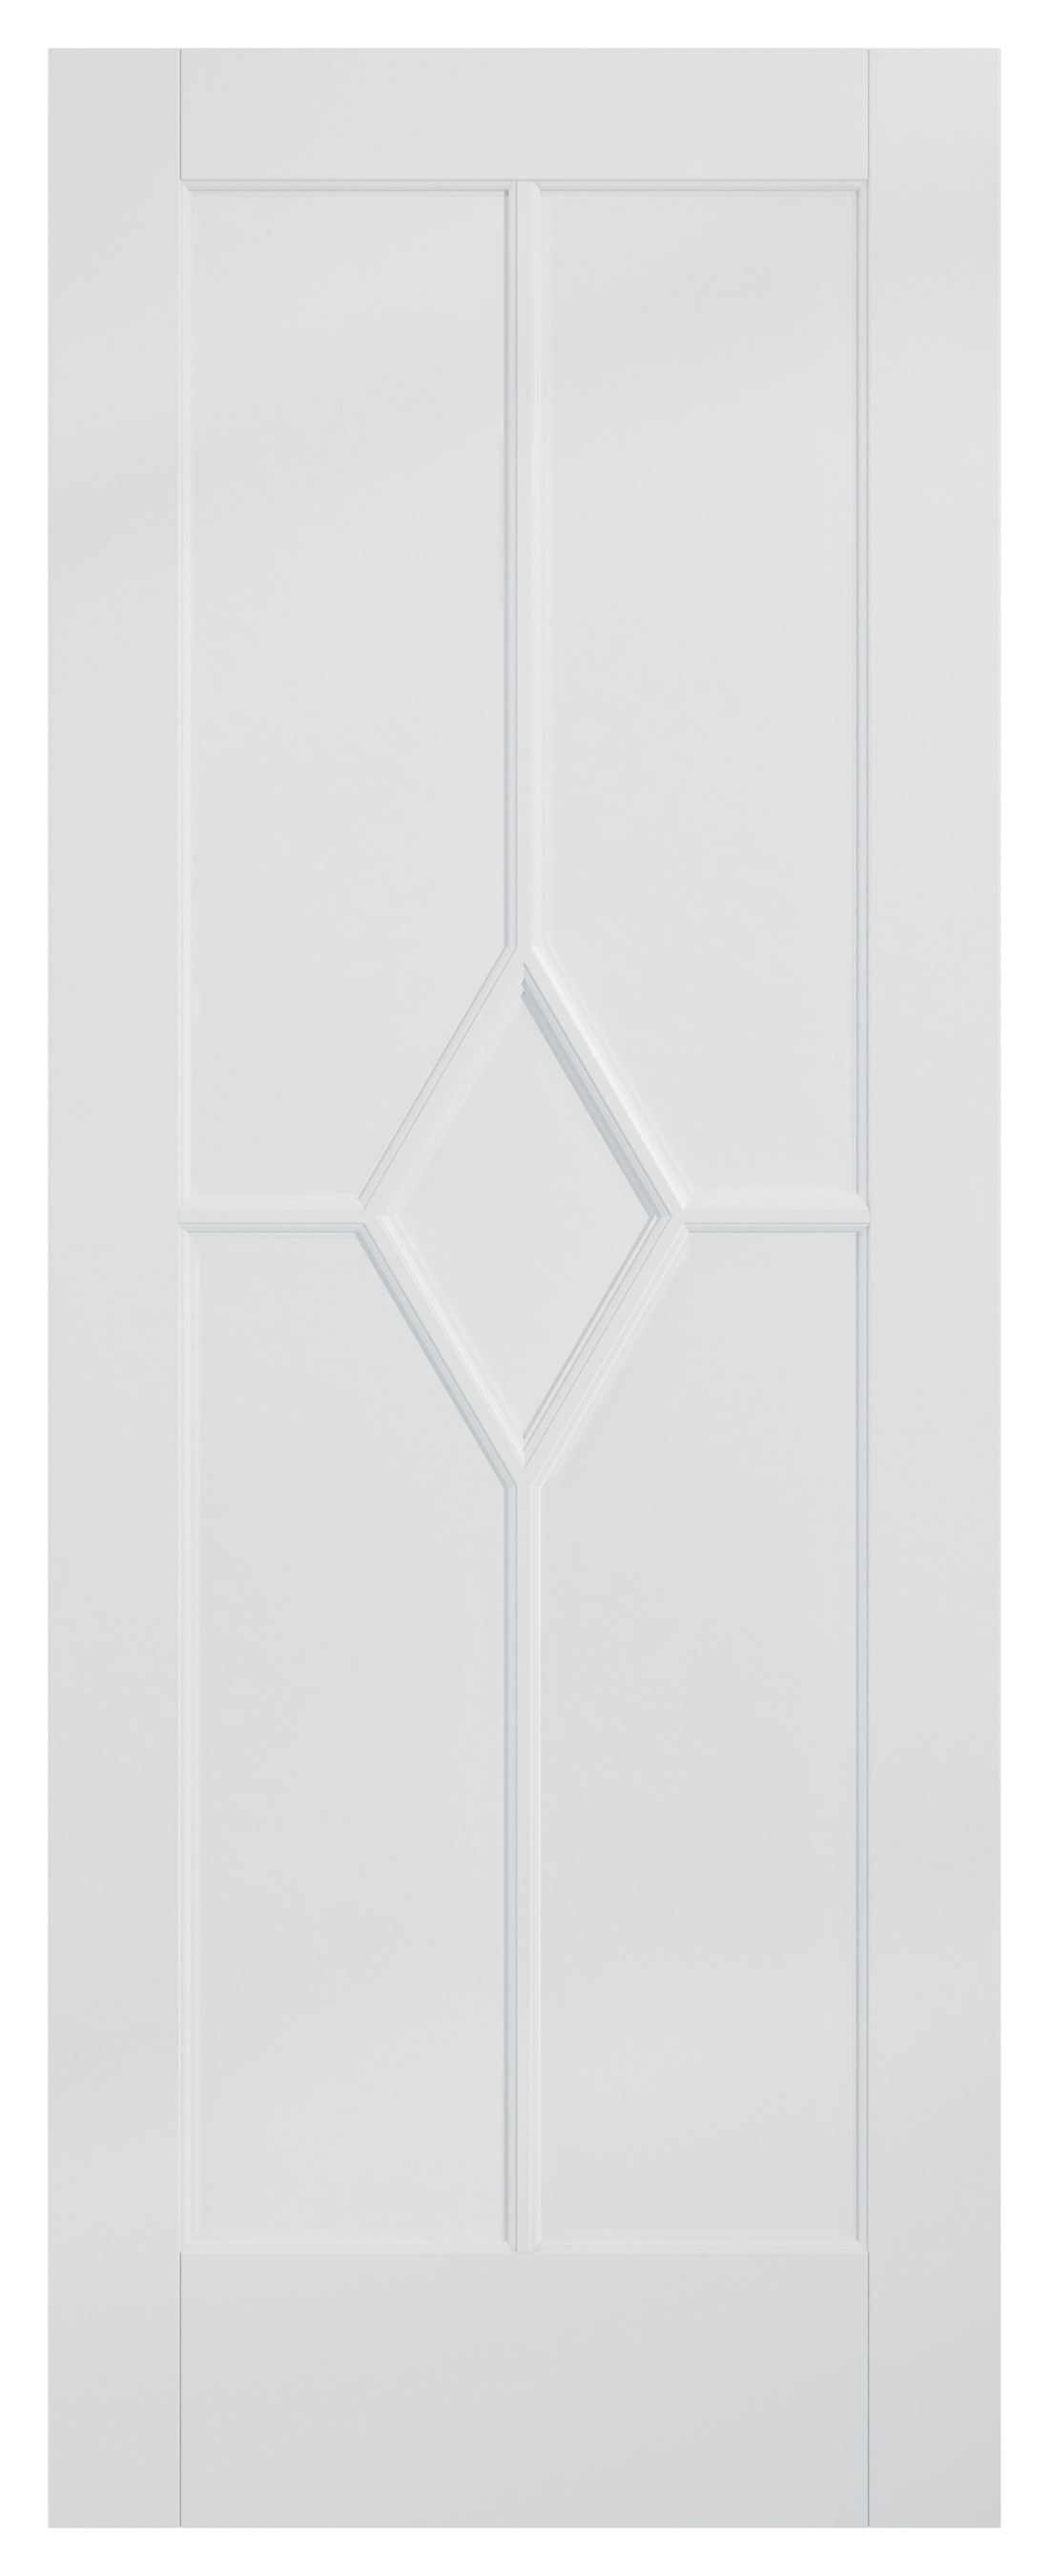 Image of LPD Internal Reims 5 Panel Primed White FD30 Fire Door - 762 x 1981mm